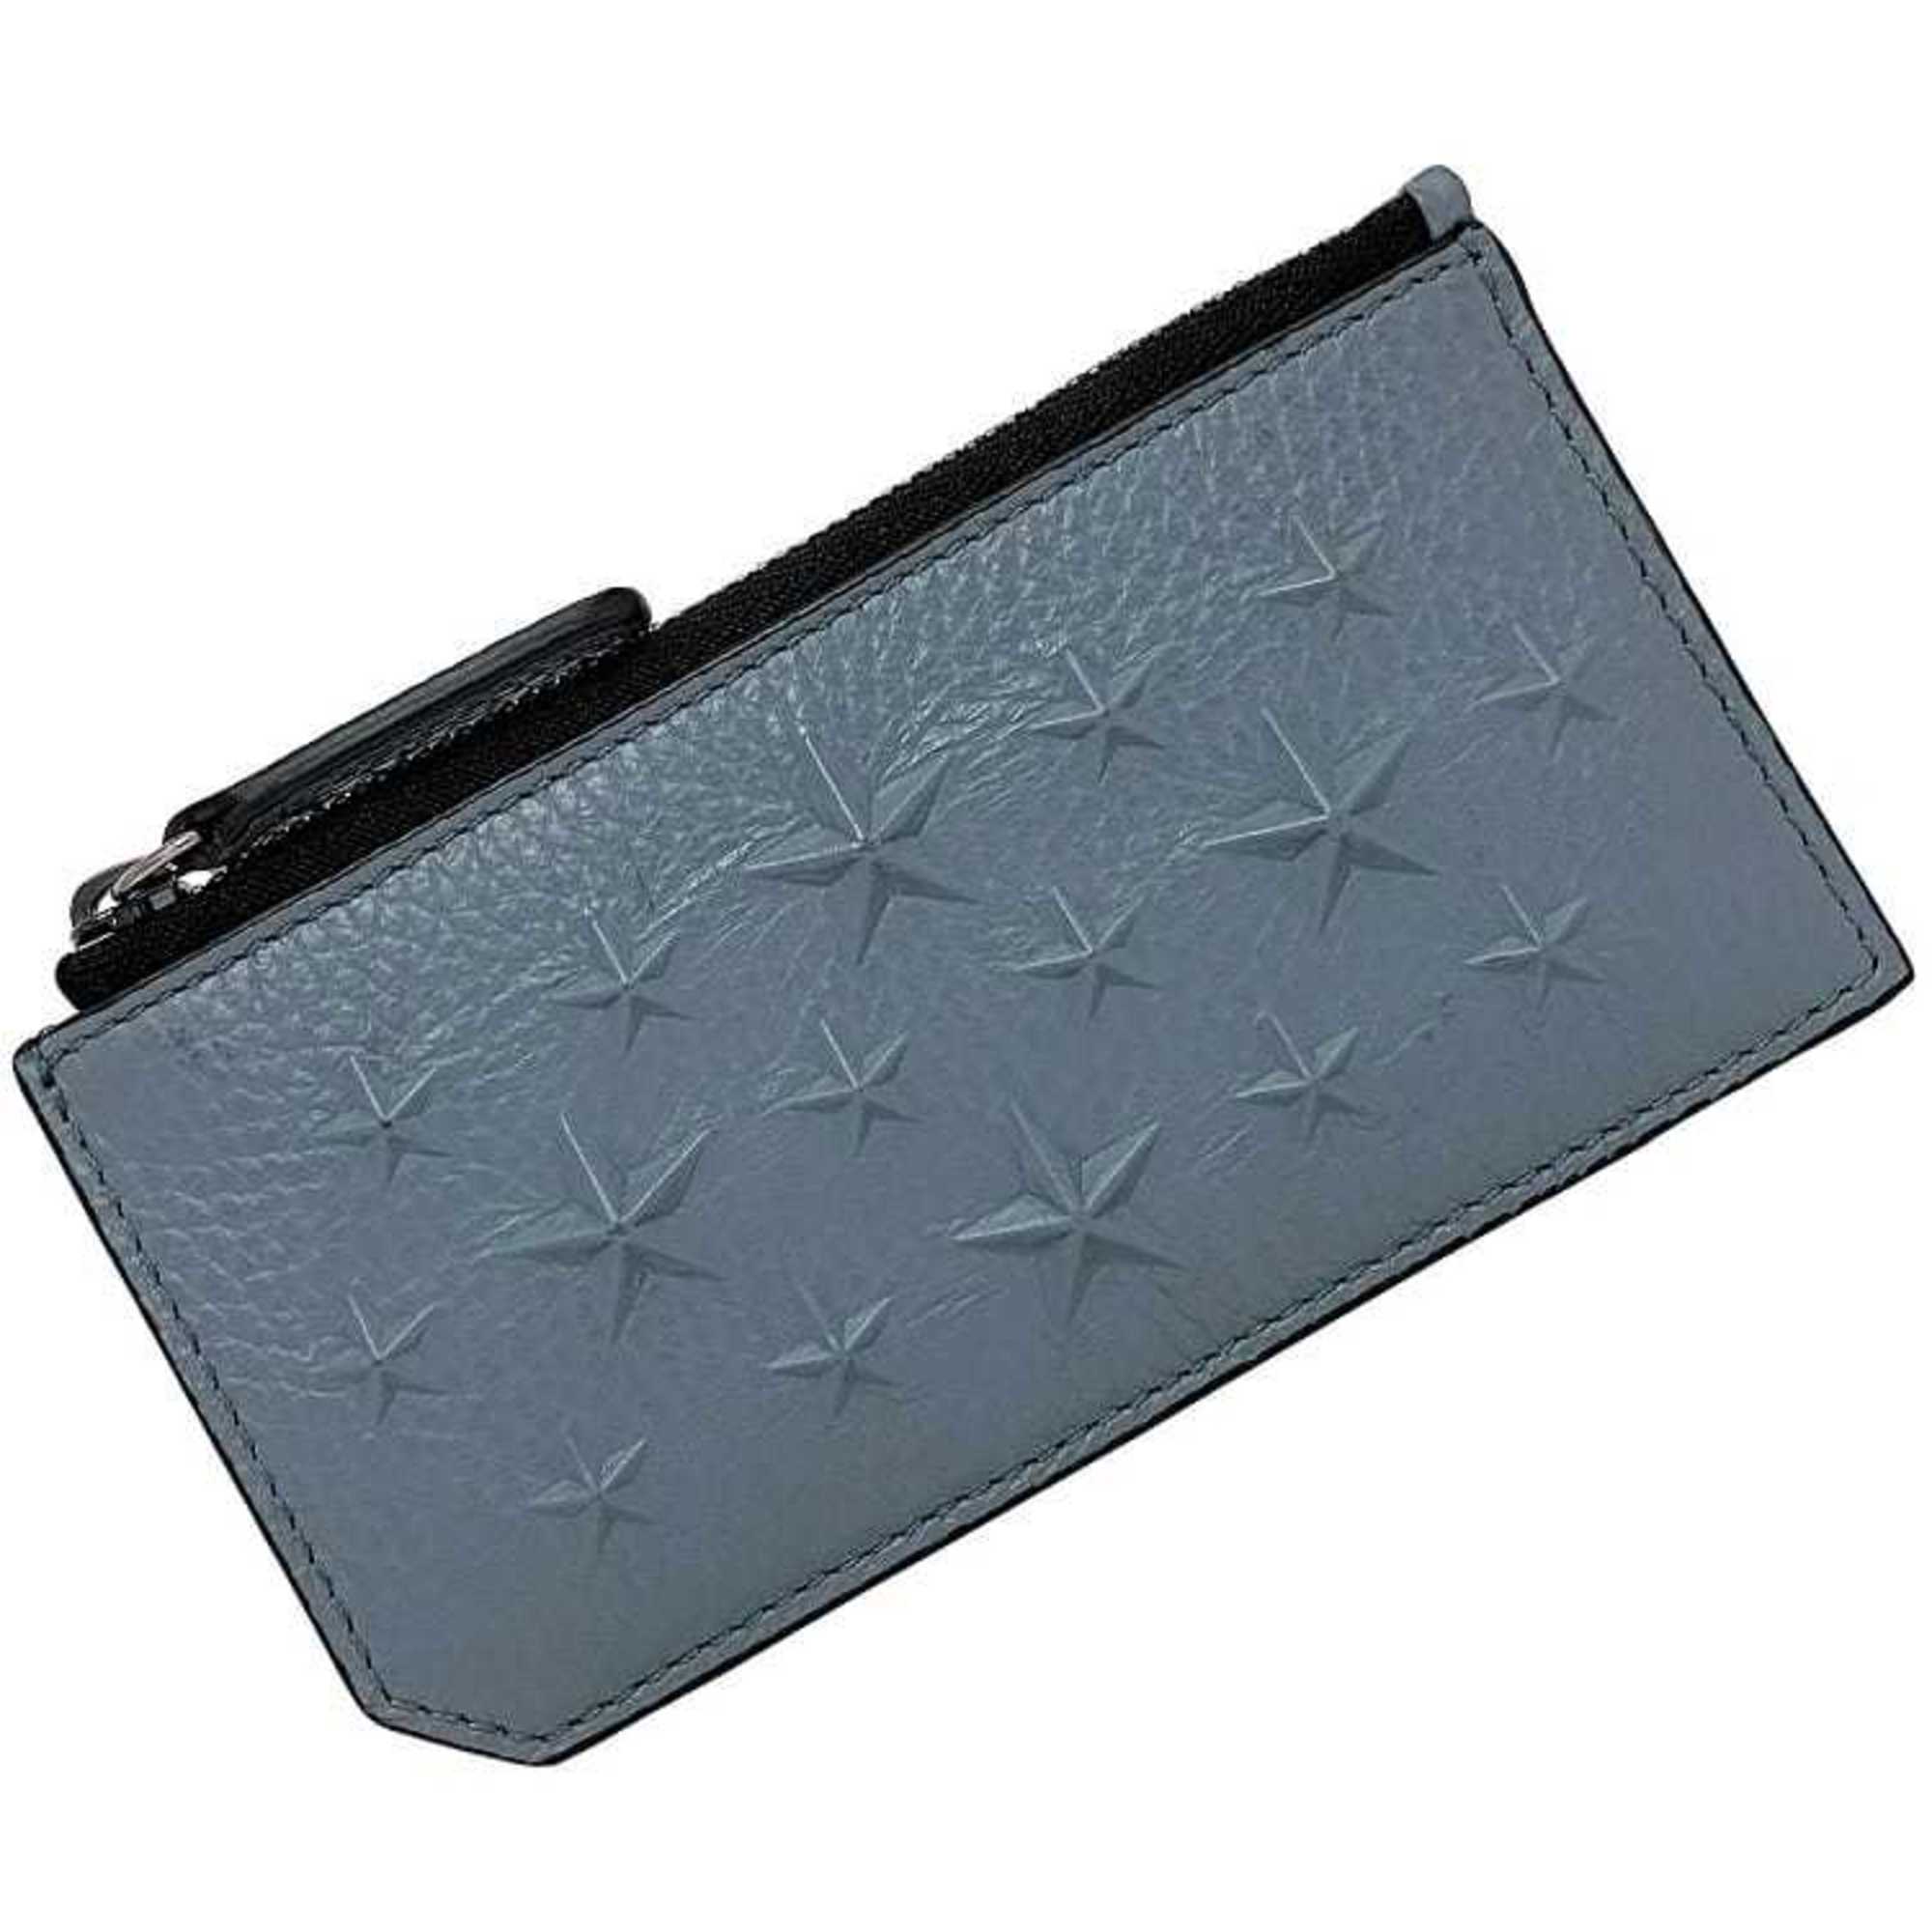 Jimmy Choo card coin case grey black CASEY ec-20605 leather JIMMY CHOO star wallet compact unisex